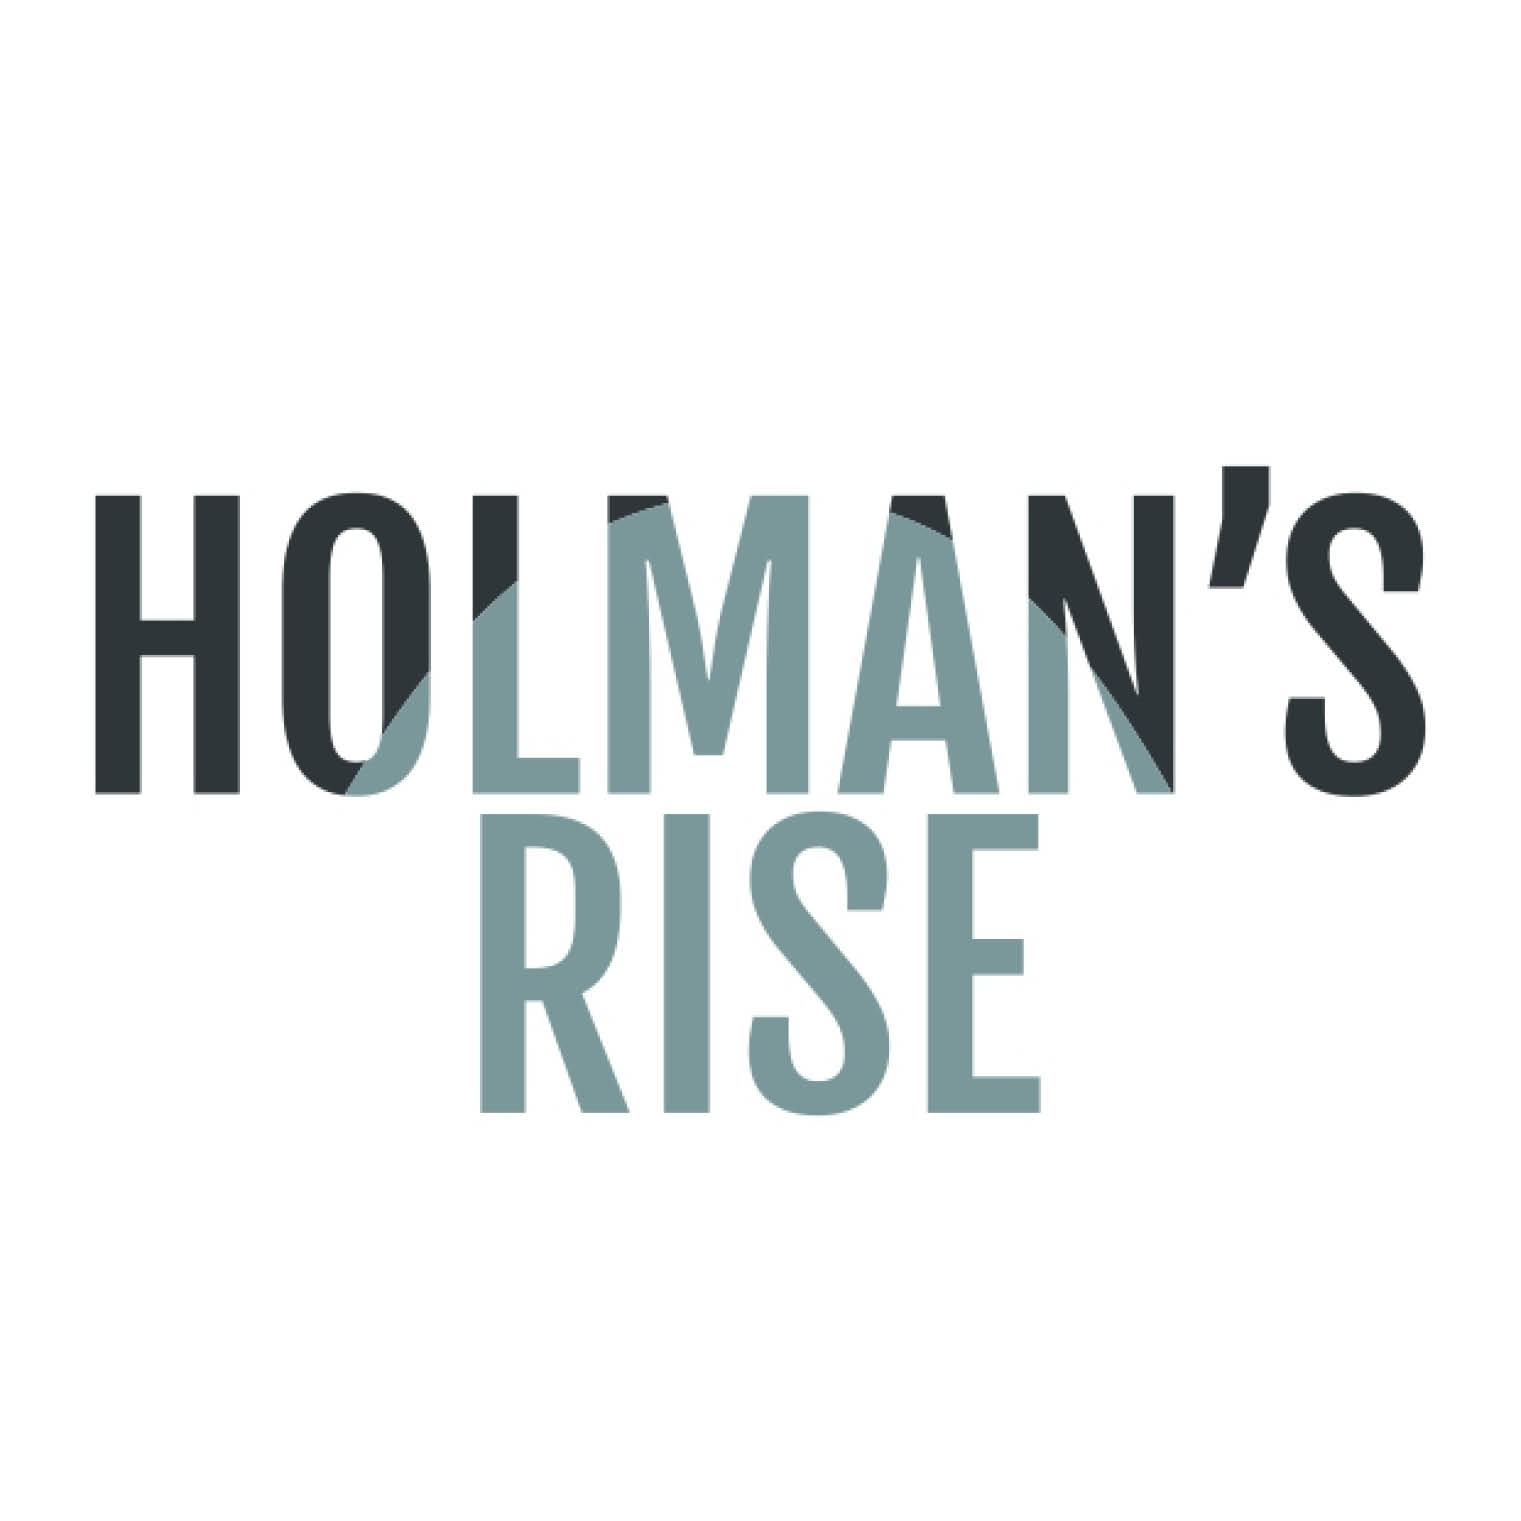 Holmans Rise, Brown Hill